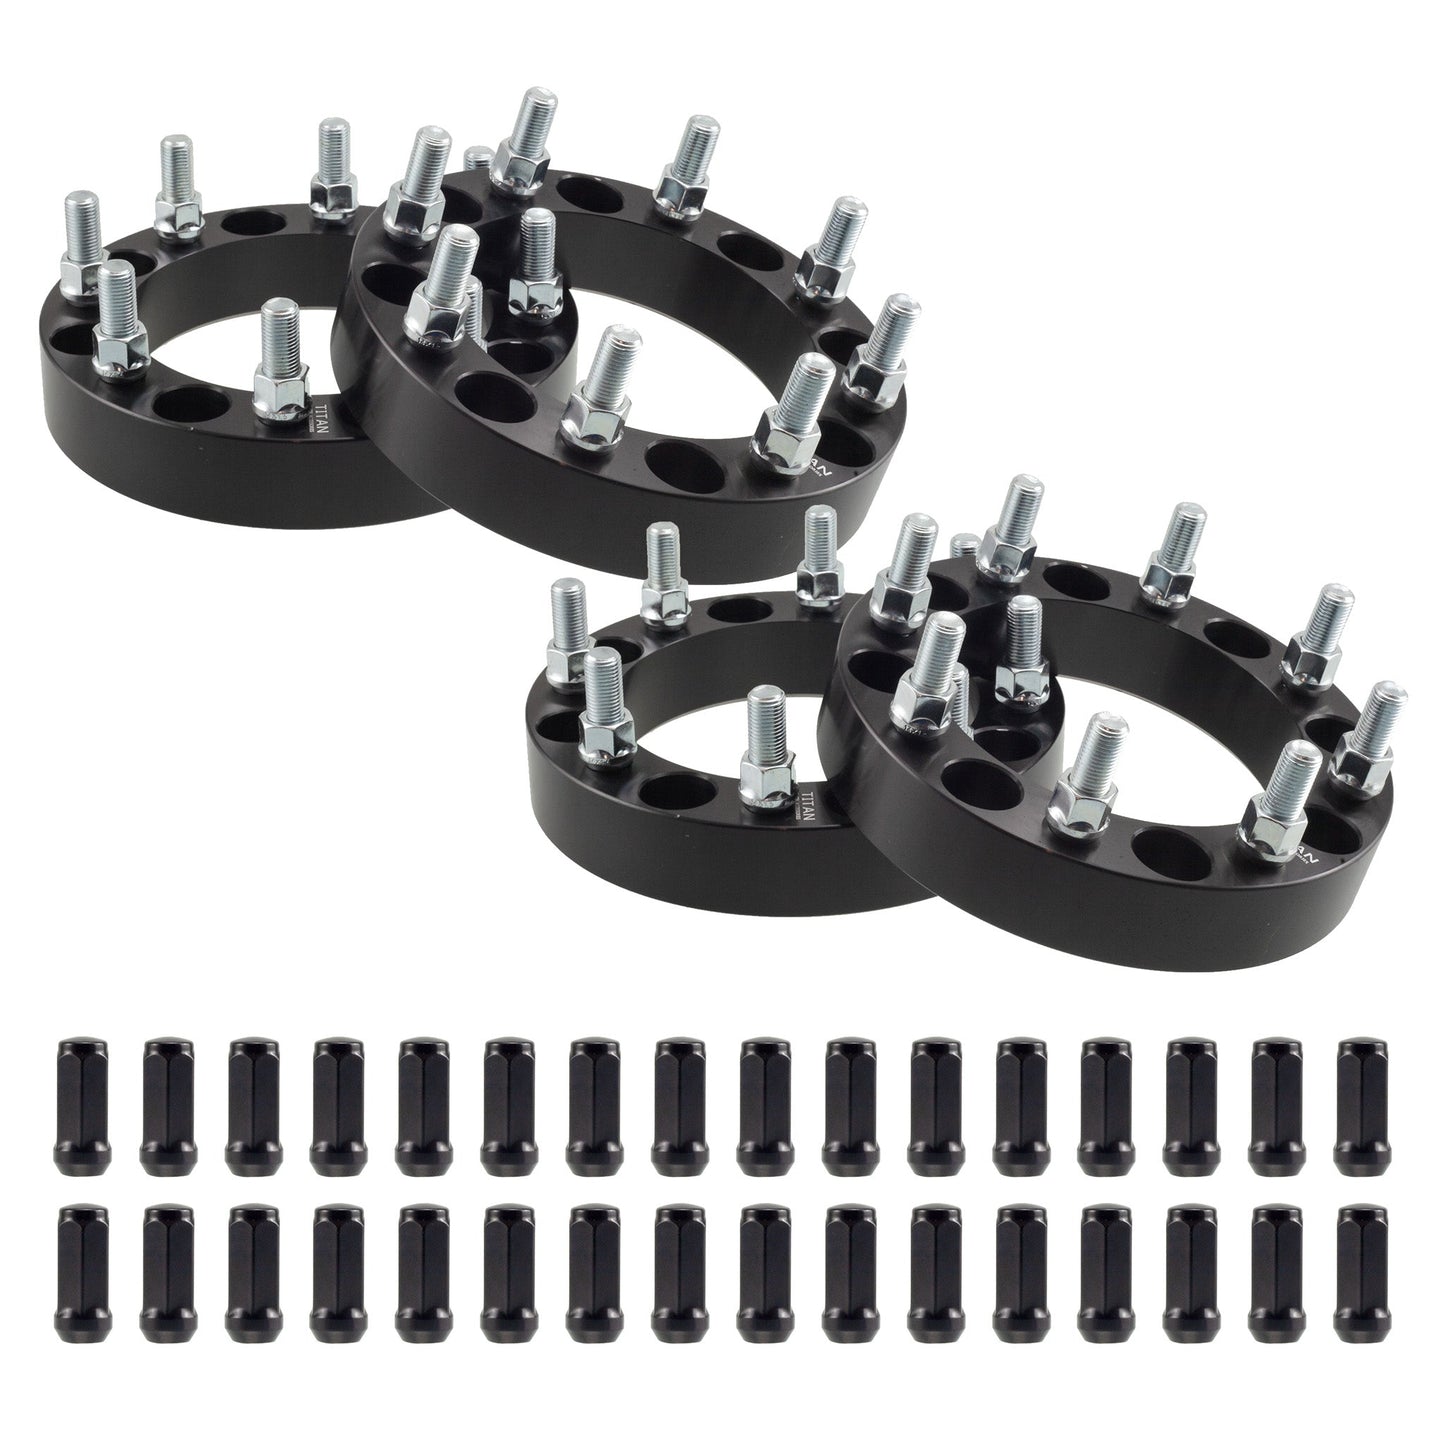 3" (75mm) Titan Wheel Spacers for GMC Sierra 2500 3500 | 8x6.5 | 14x1.5 Studs | Titan Wheel Accessories